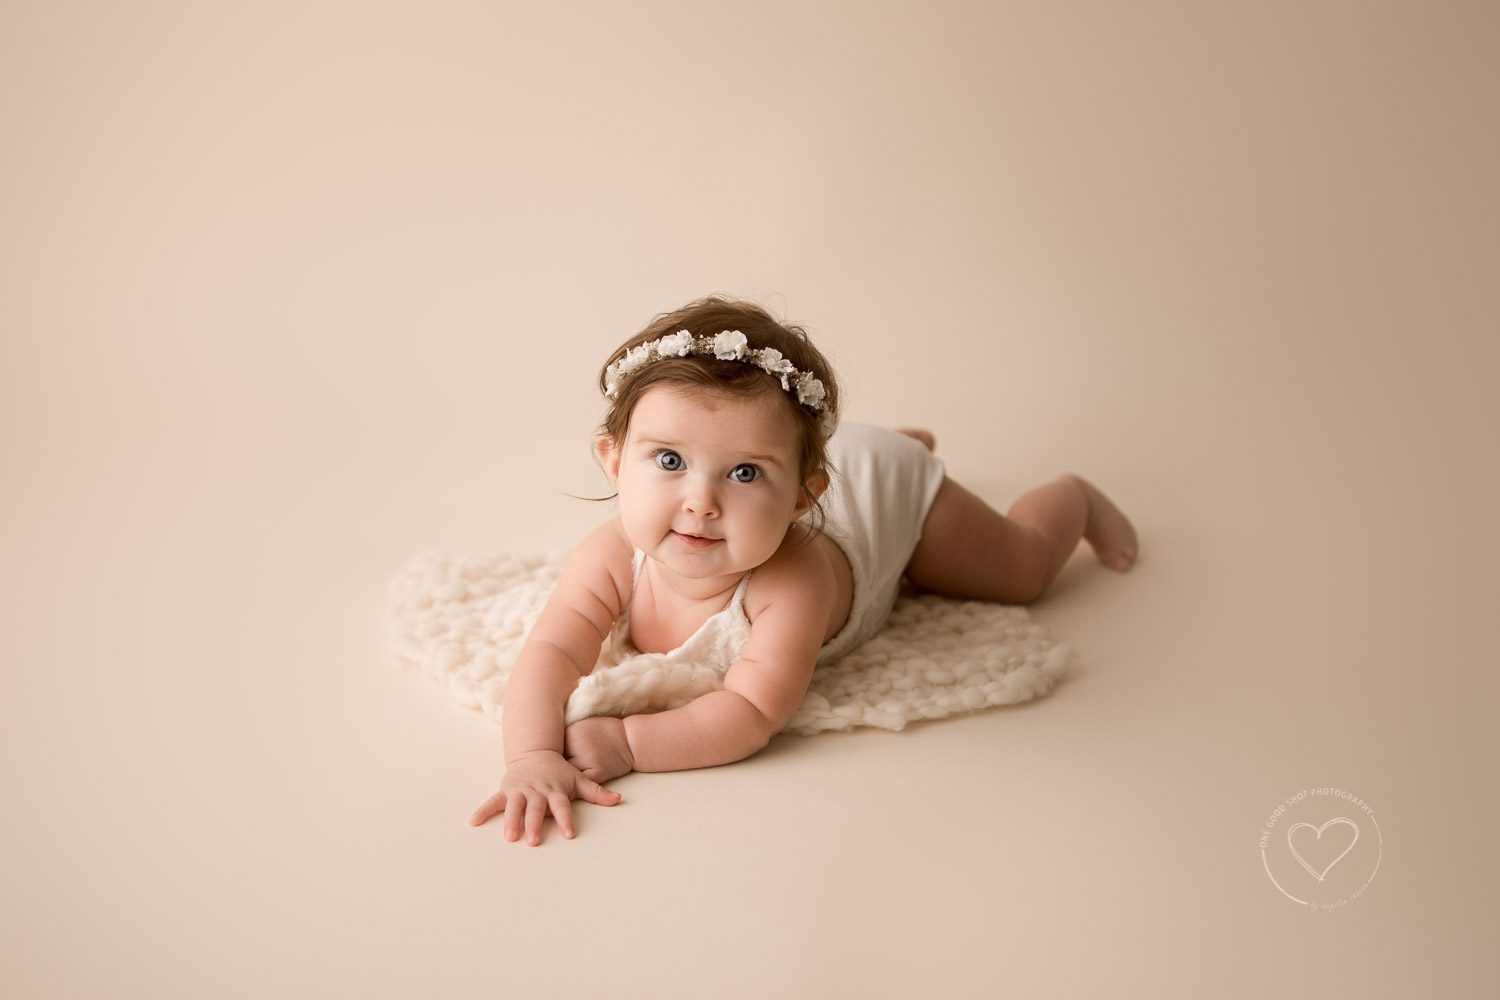 6 month baby milestone photo, neutral colors, white romper, floral halo, wool layer, tummy pose, fresno, clovis, photographer